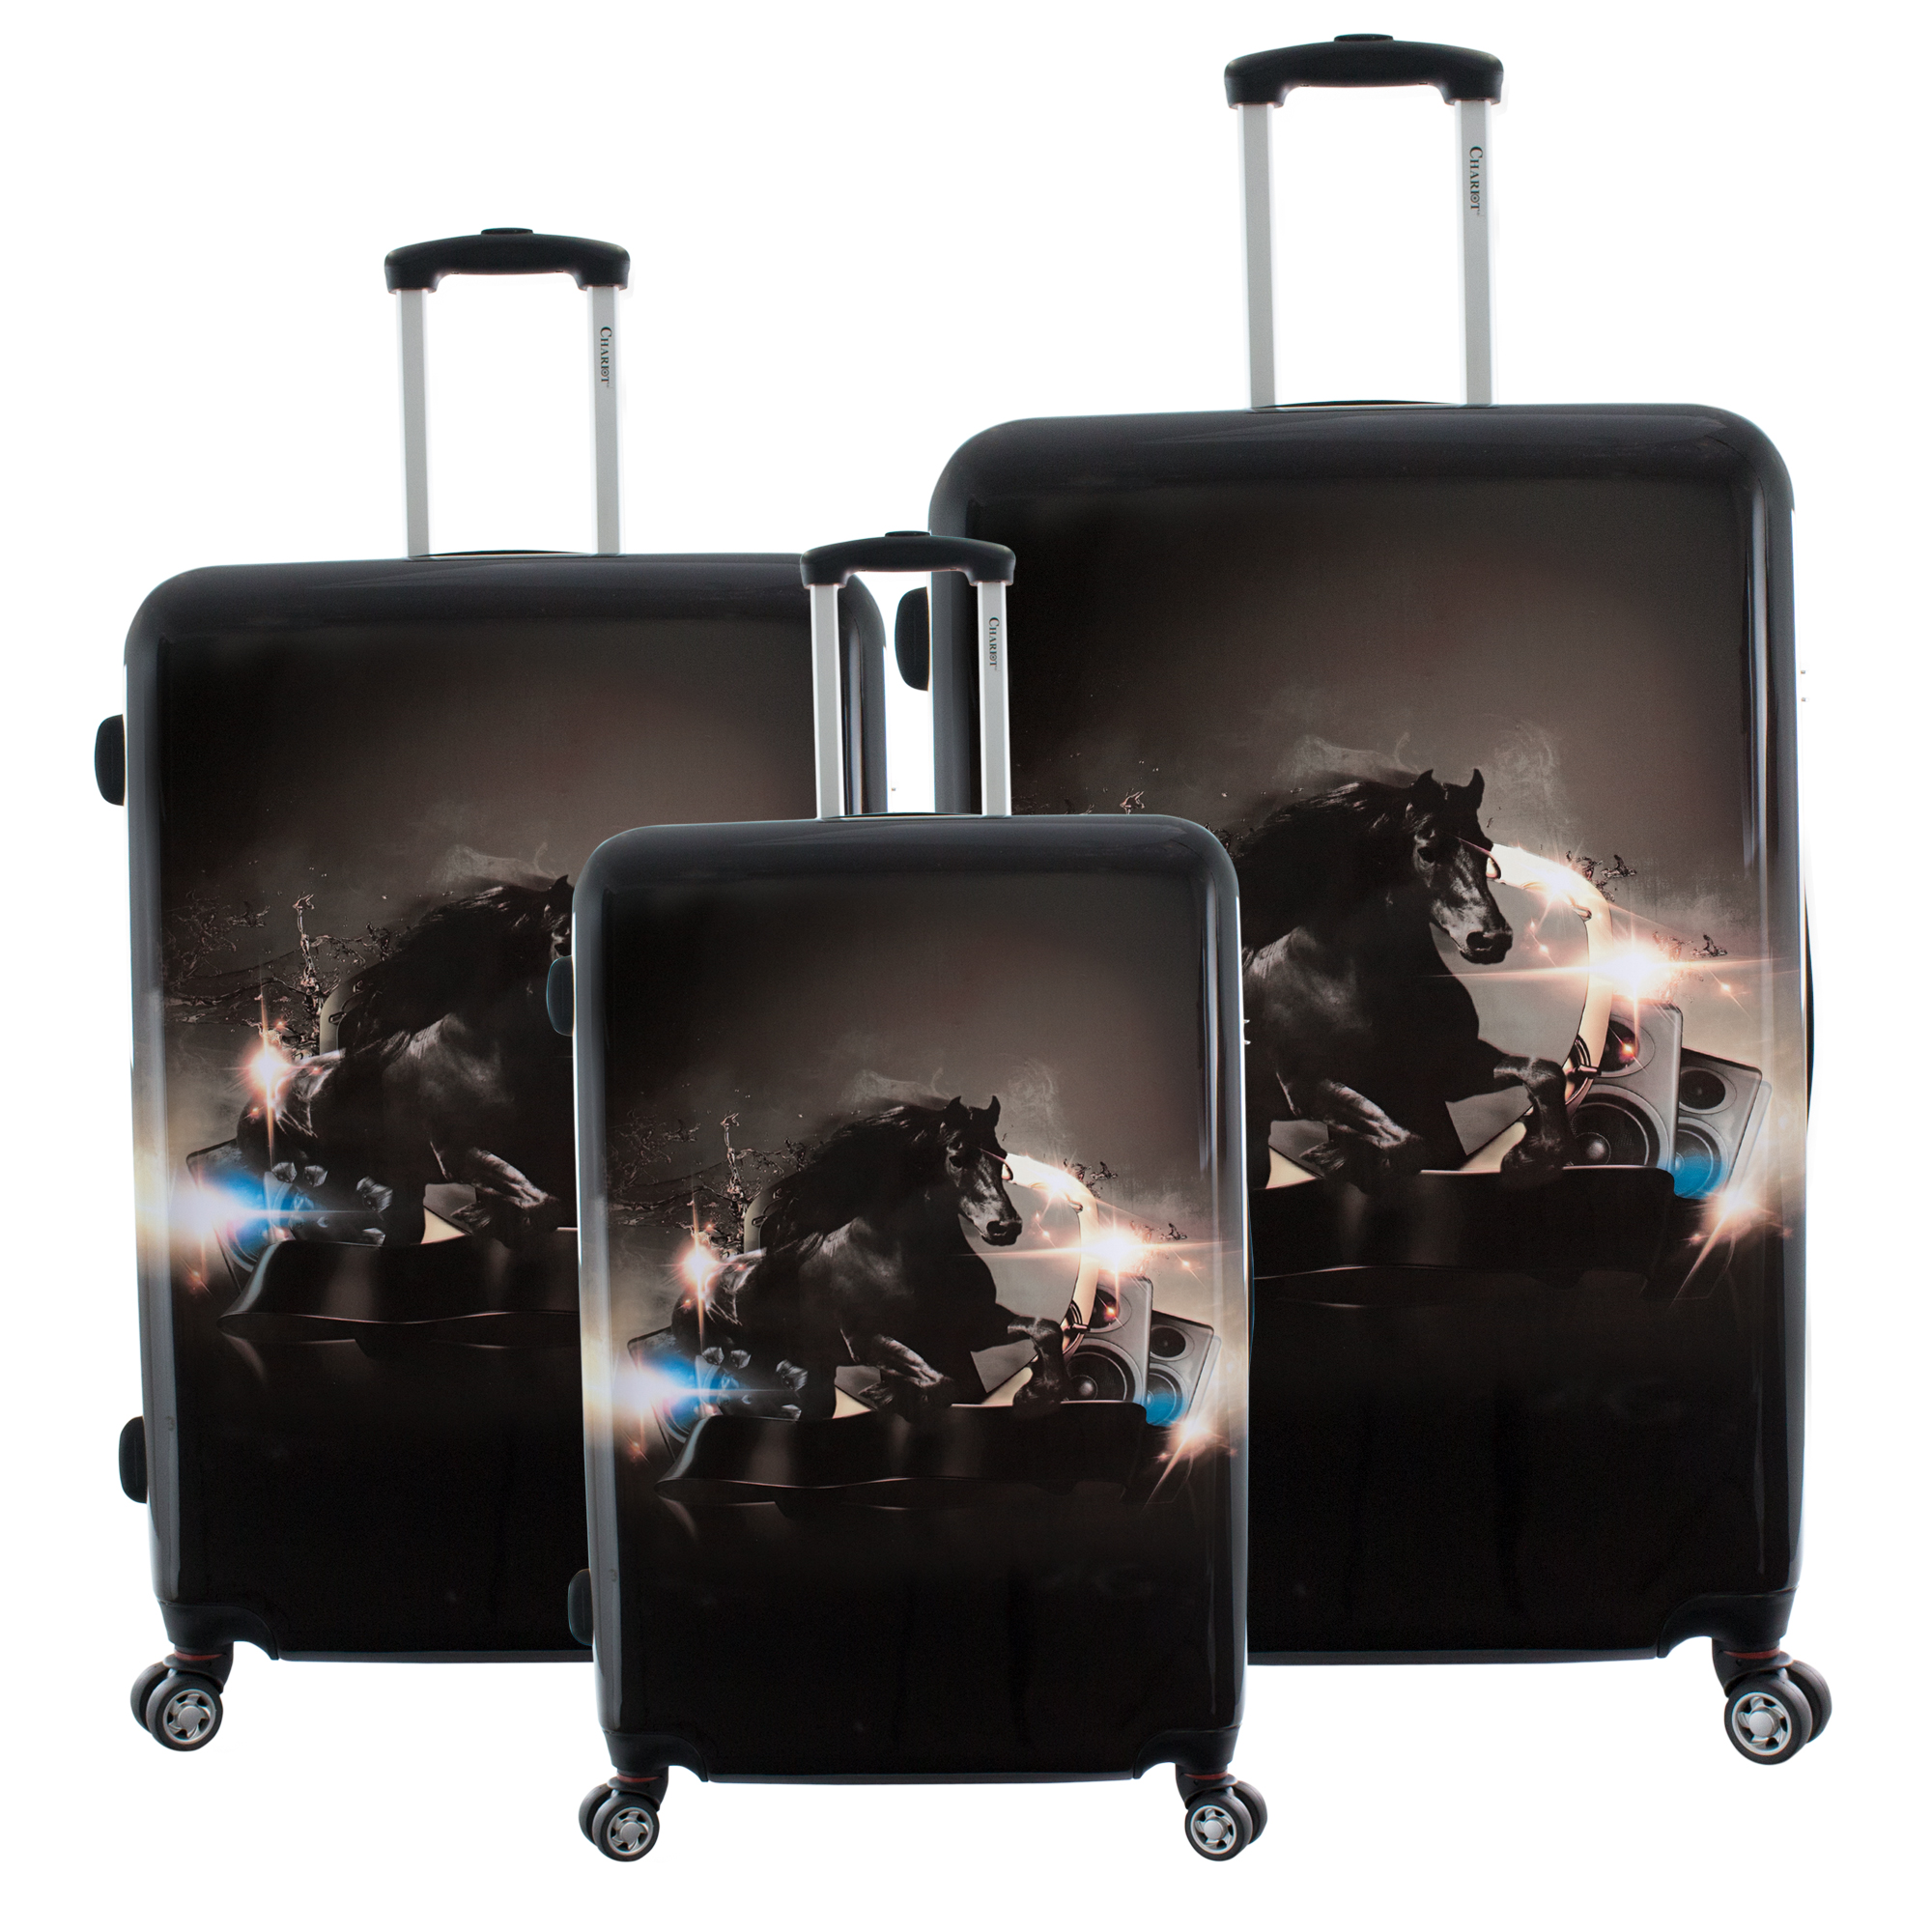 Chariot Stallion 3pc Luggage set